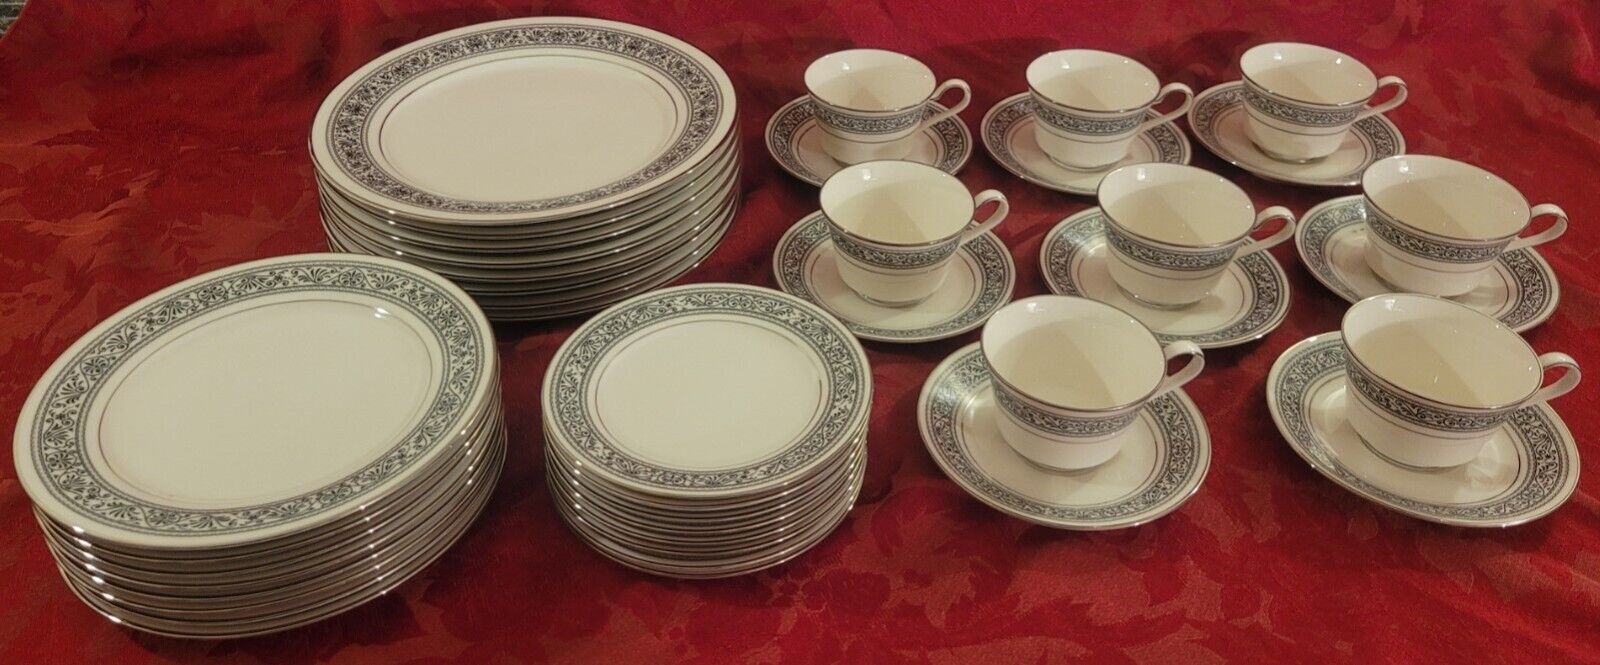 Prelude China by NORITAKE Black & Ivory Dinnerware Wedding MCM - 40 pieces 7570